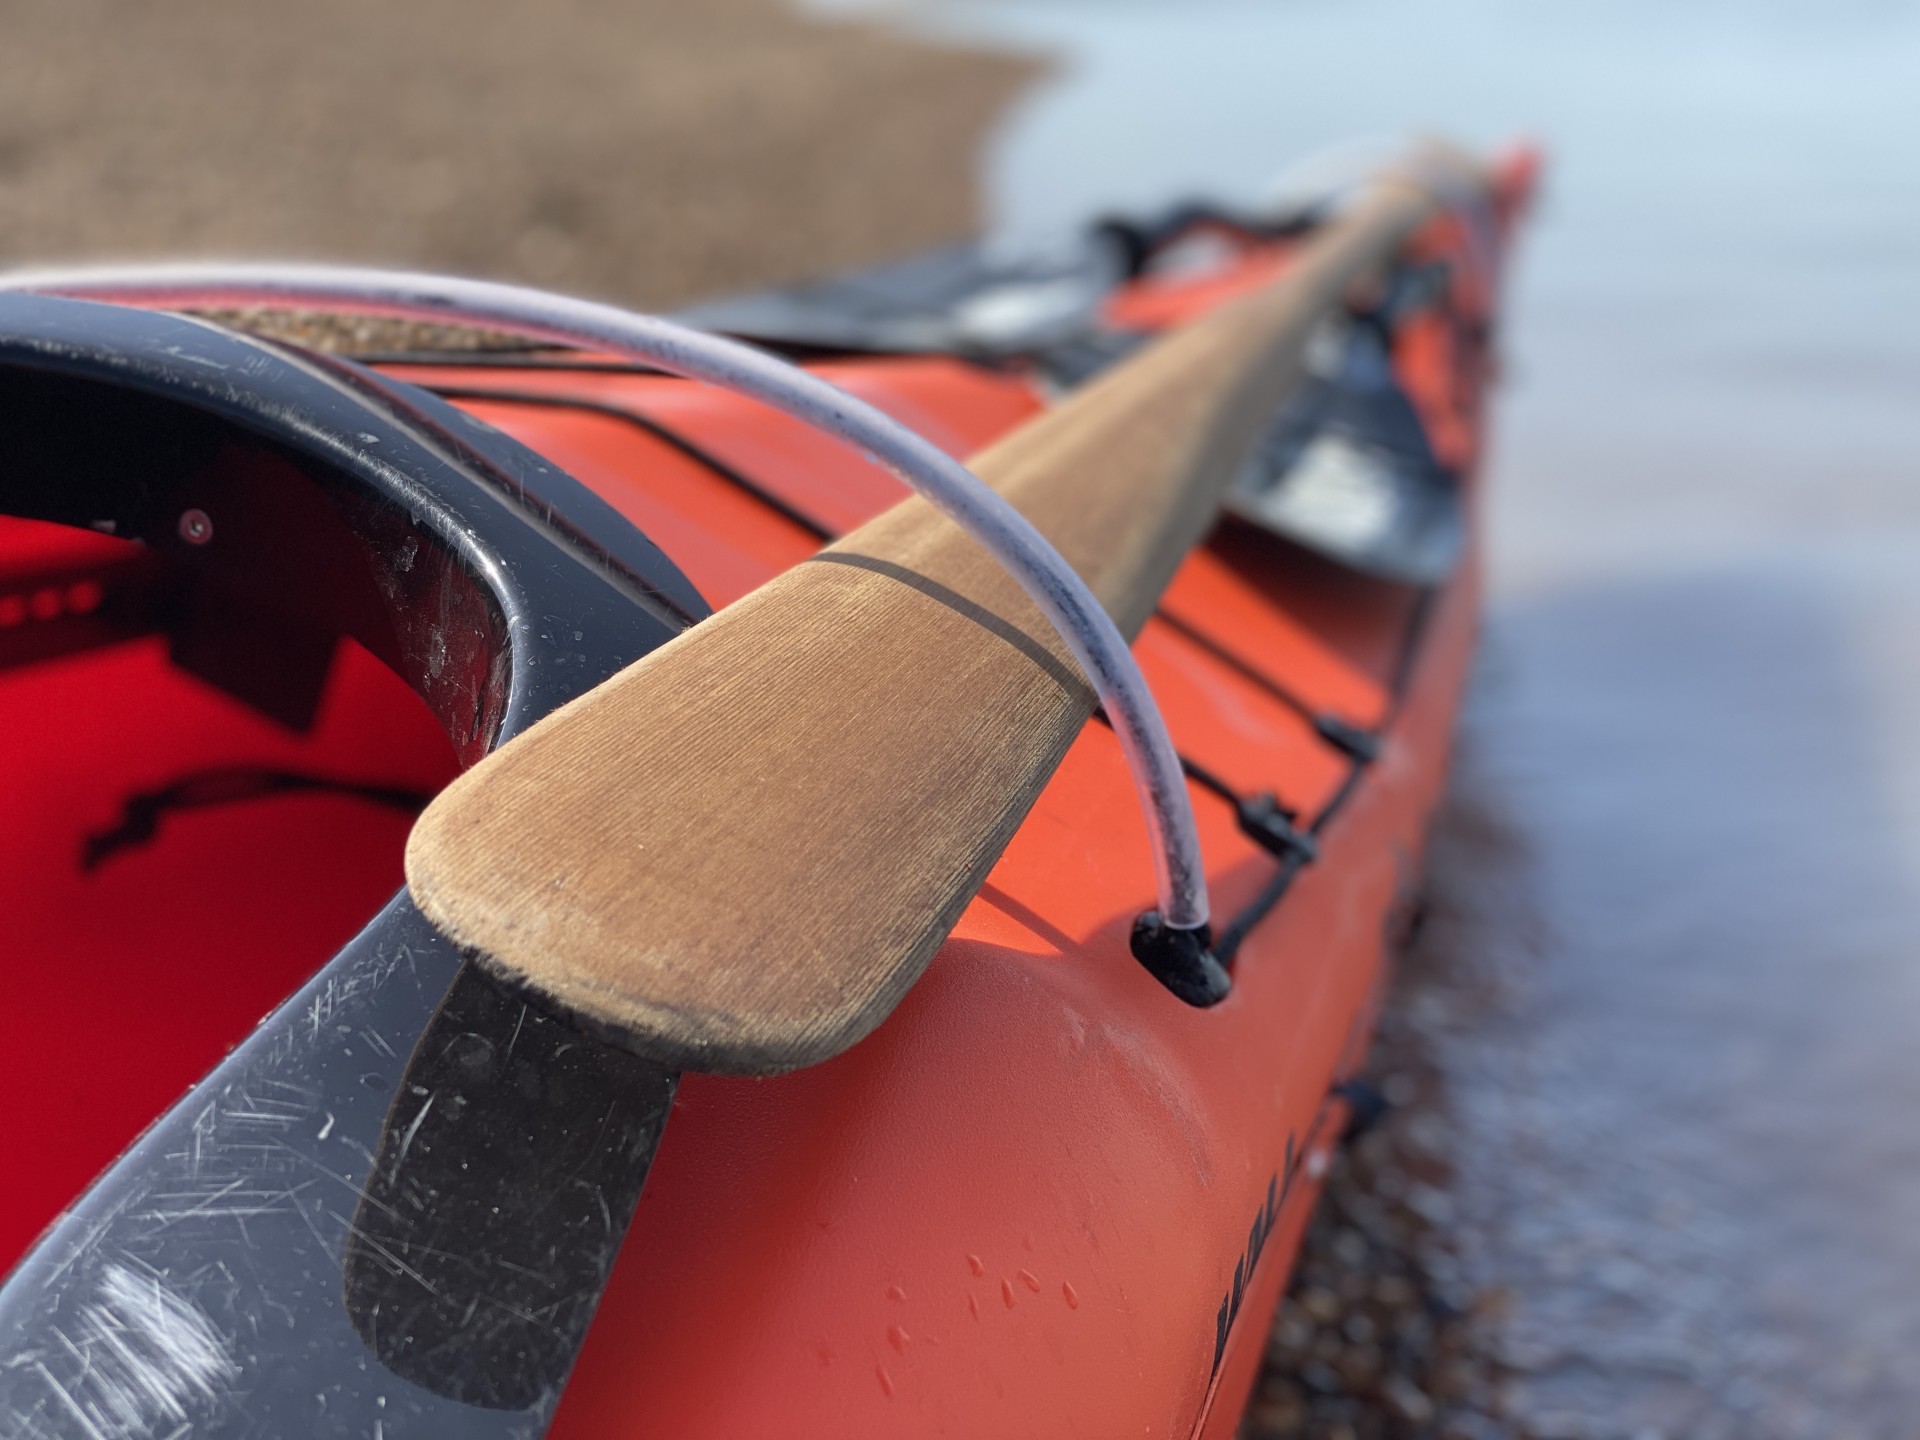 Greenland paddles with NOMAD Sea Kayaking.